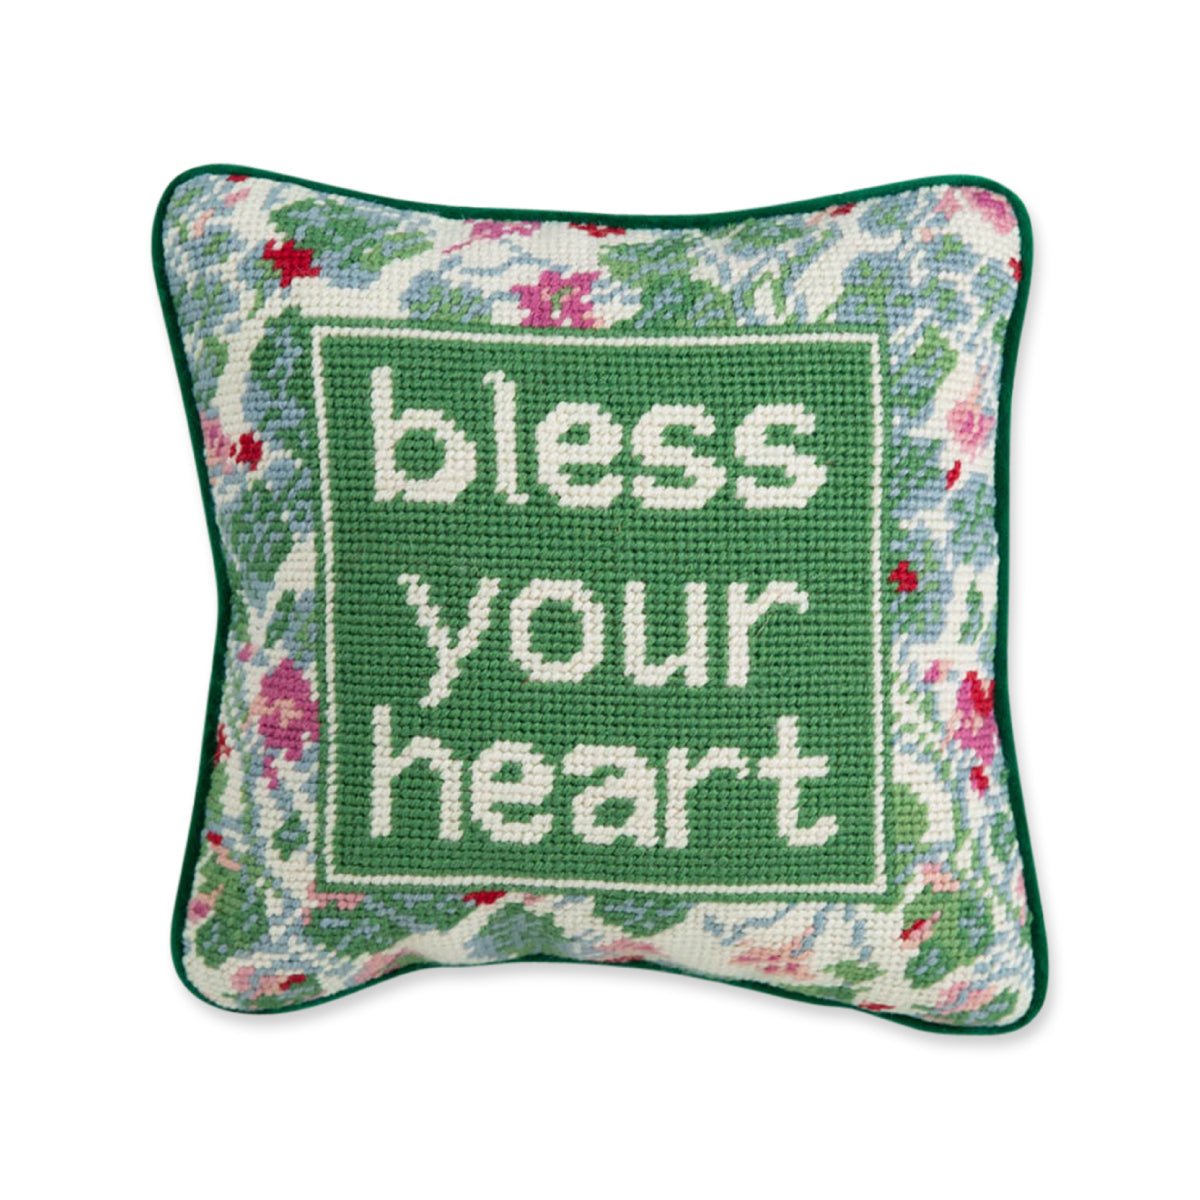 Bless Your Heart Needlepoint Pillow - Throw Pillows - Furbish Studio - The Grove